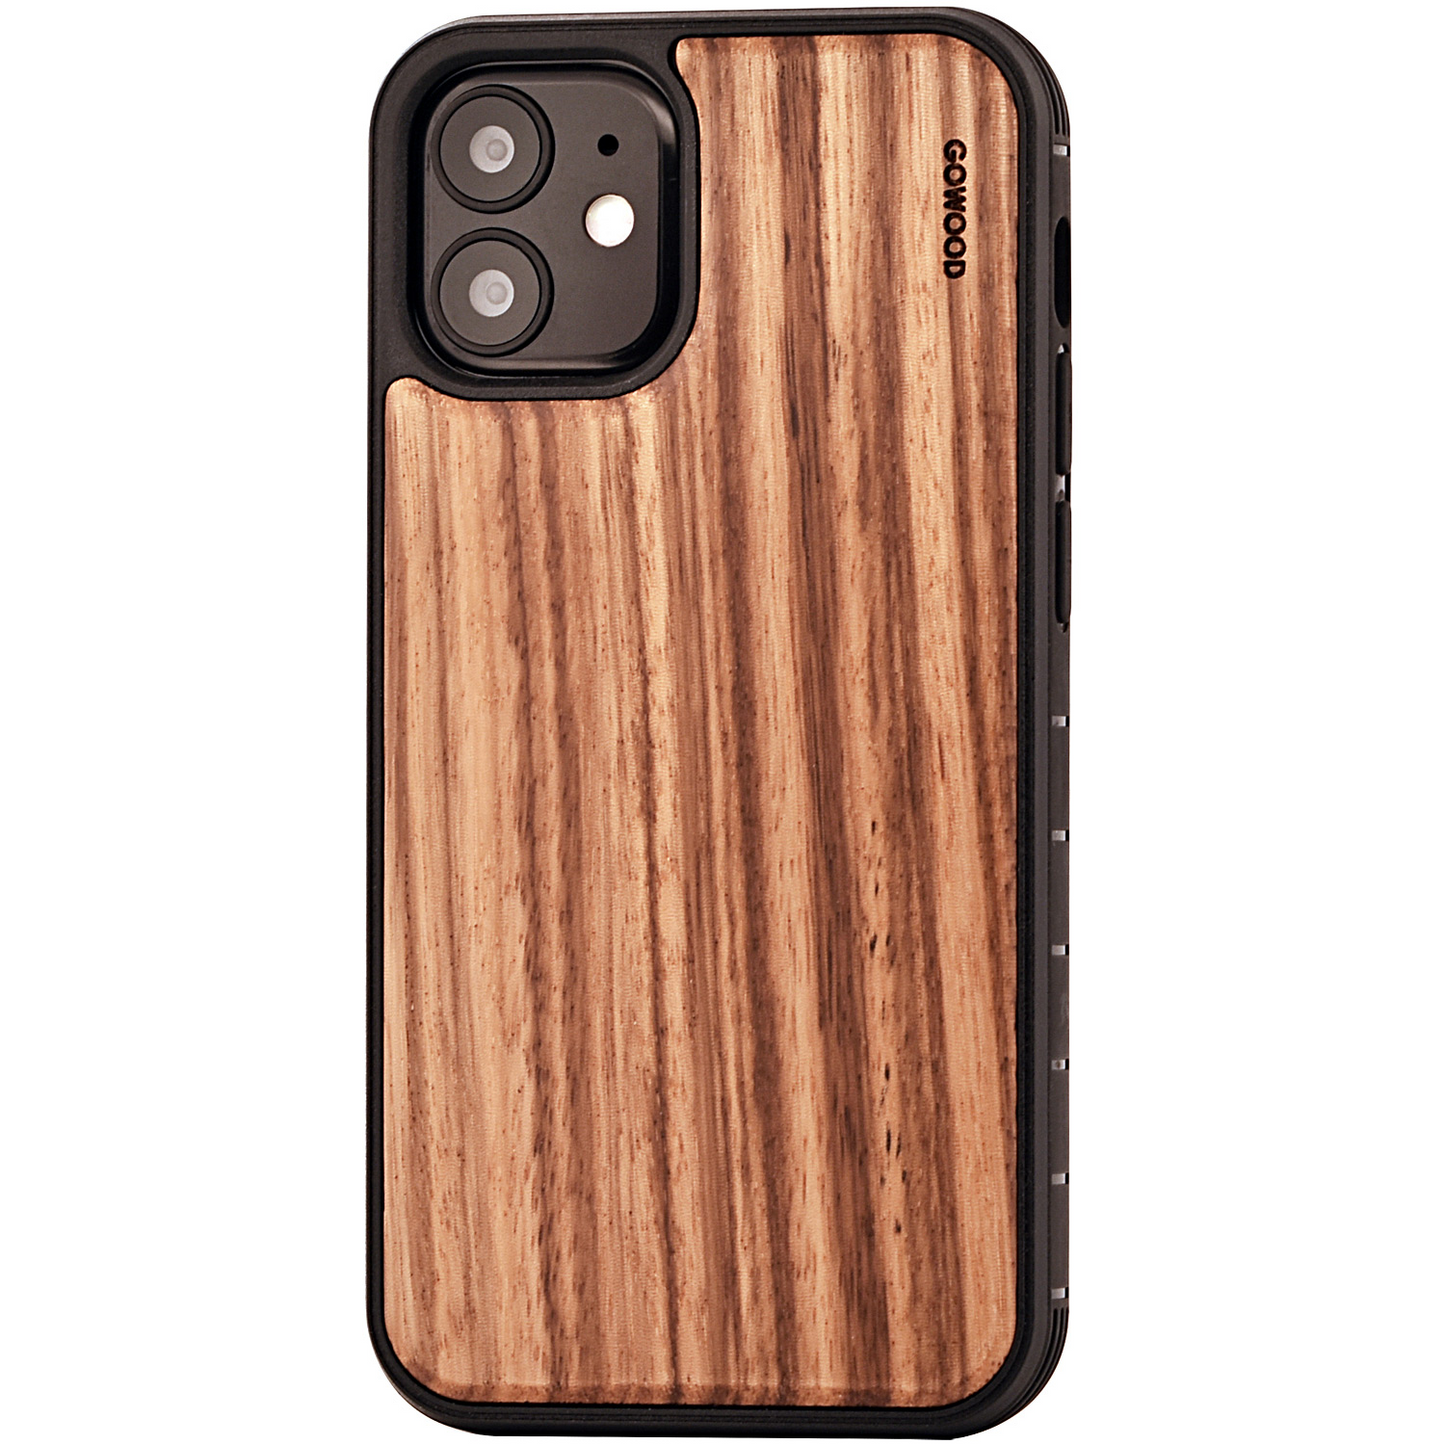 iPhone 12 Mini wood case zebra backside with TPU bumper and black PC